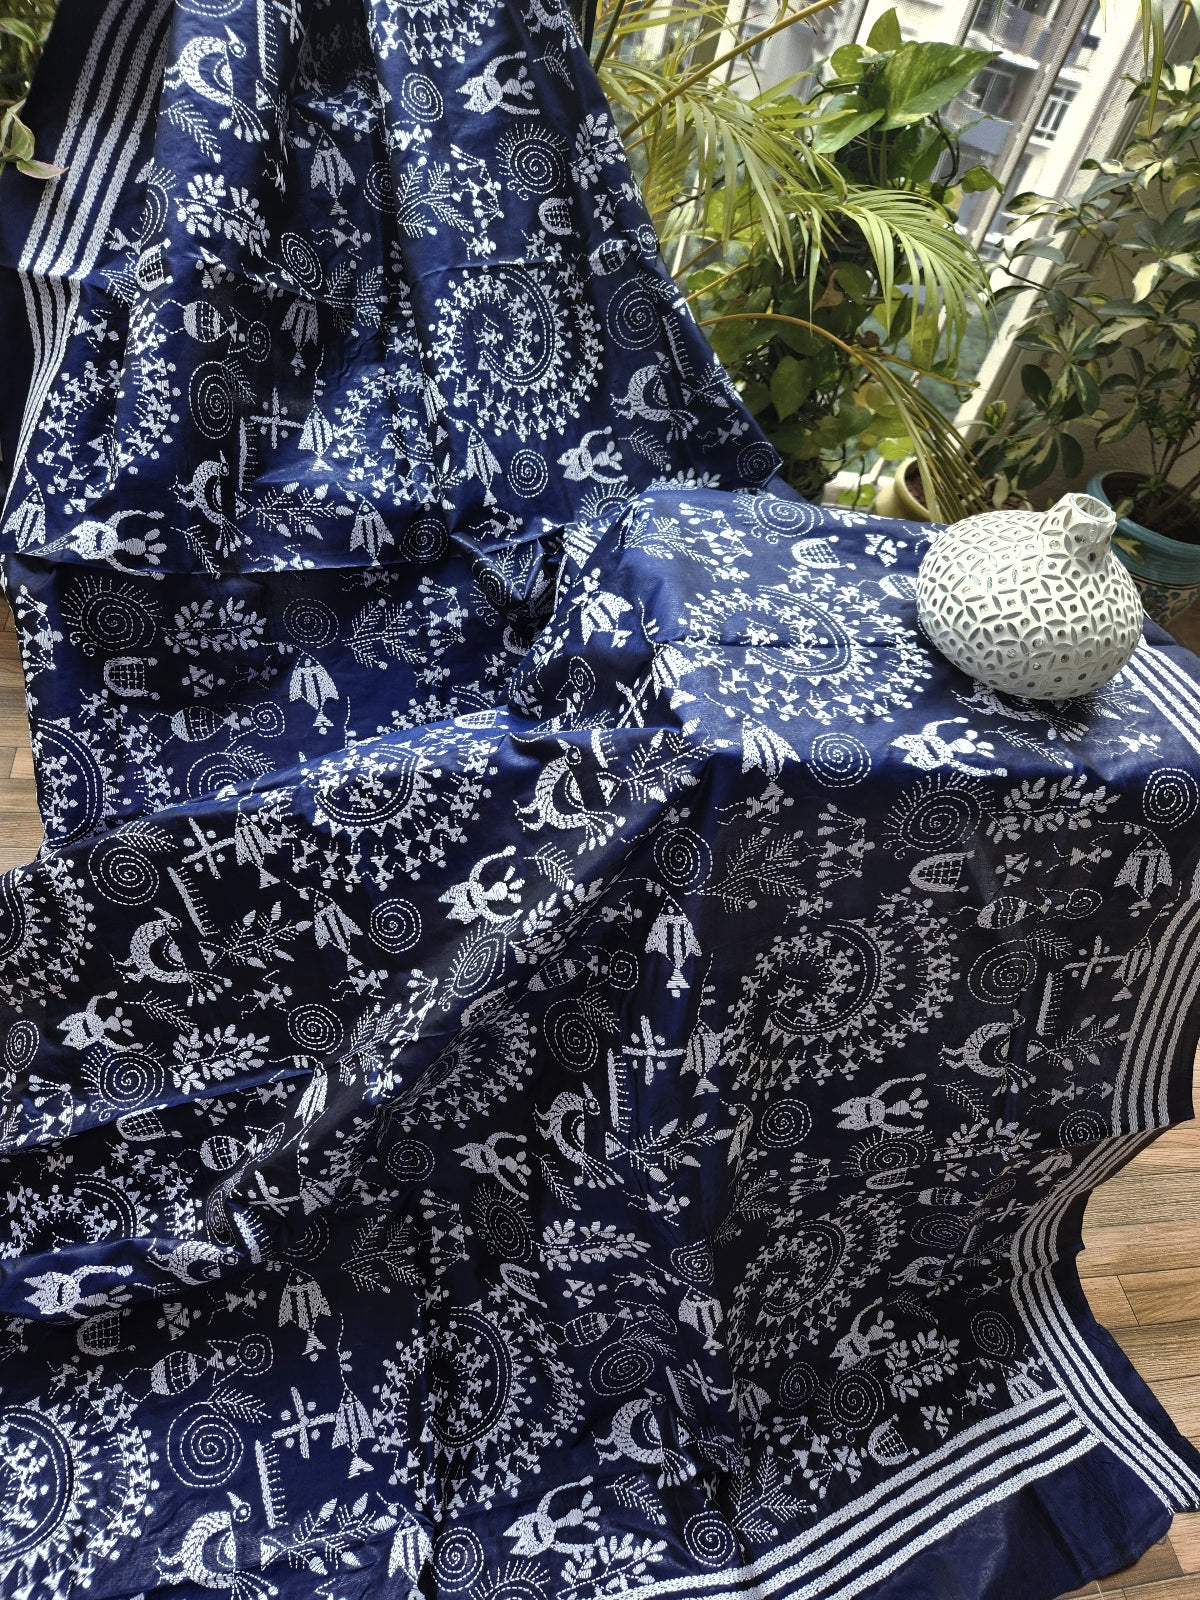 WARLI DUPATTA silk dupatta blue dupattaonline warli hand embroidery shekantha kantha dupatta